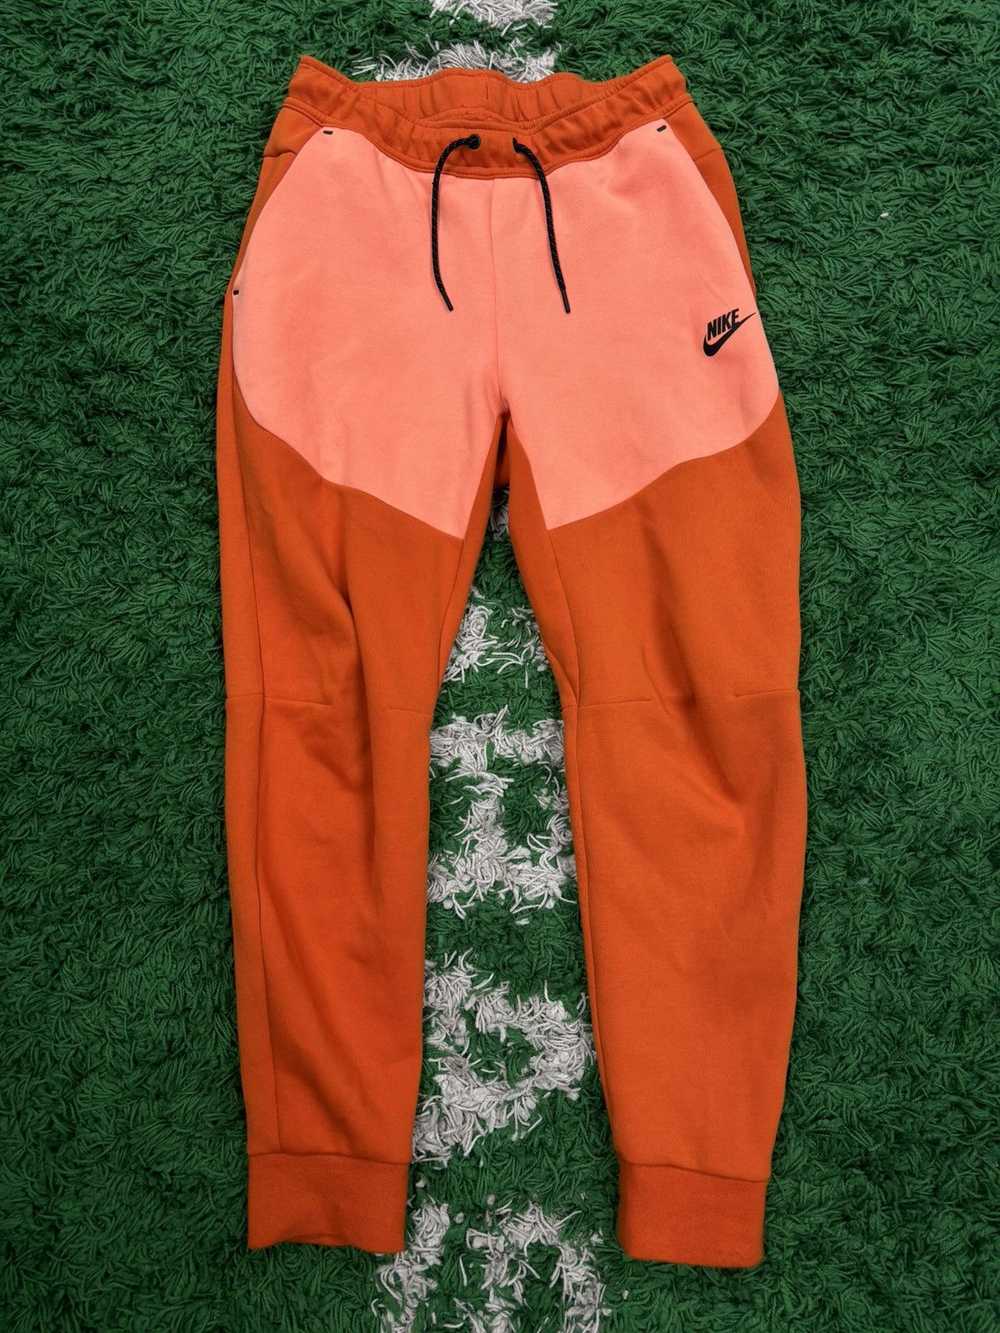 Nike Nike tech orange sweatpants small - image 1